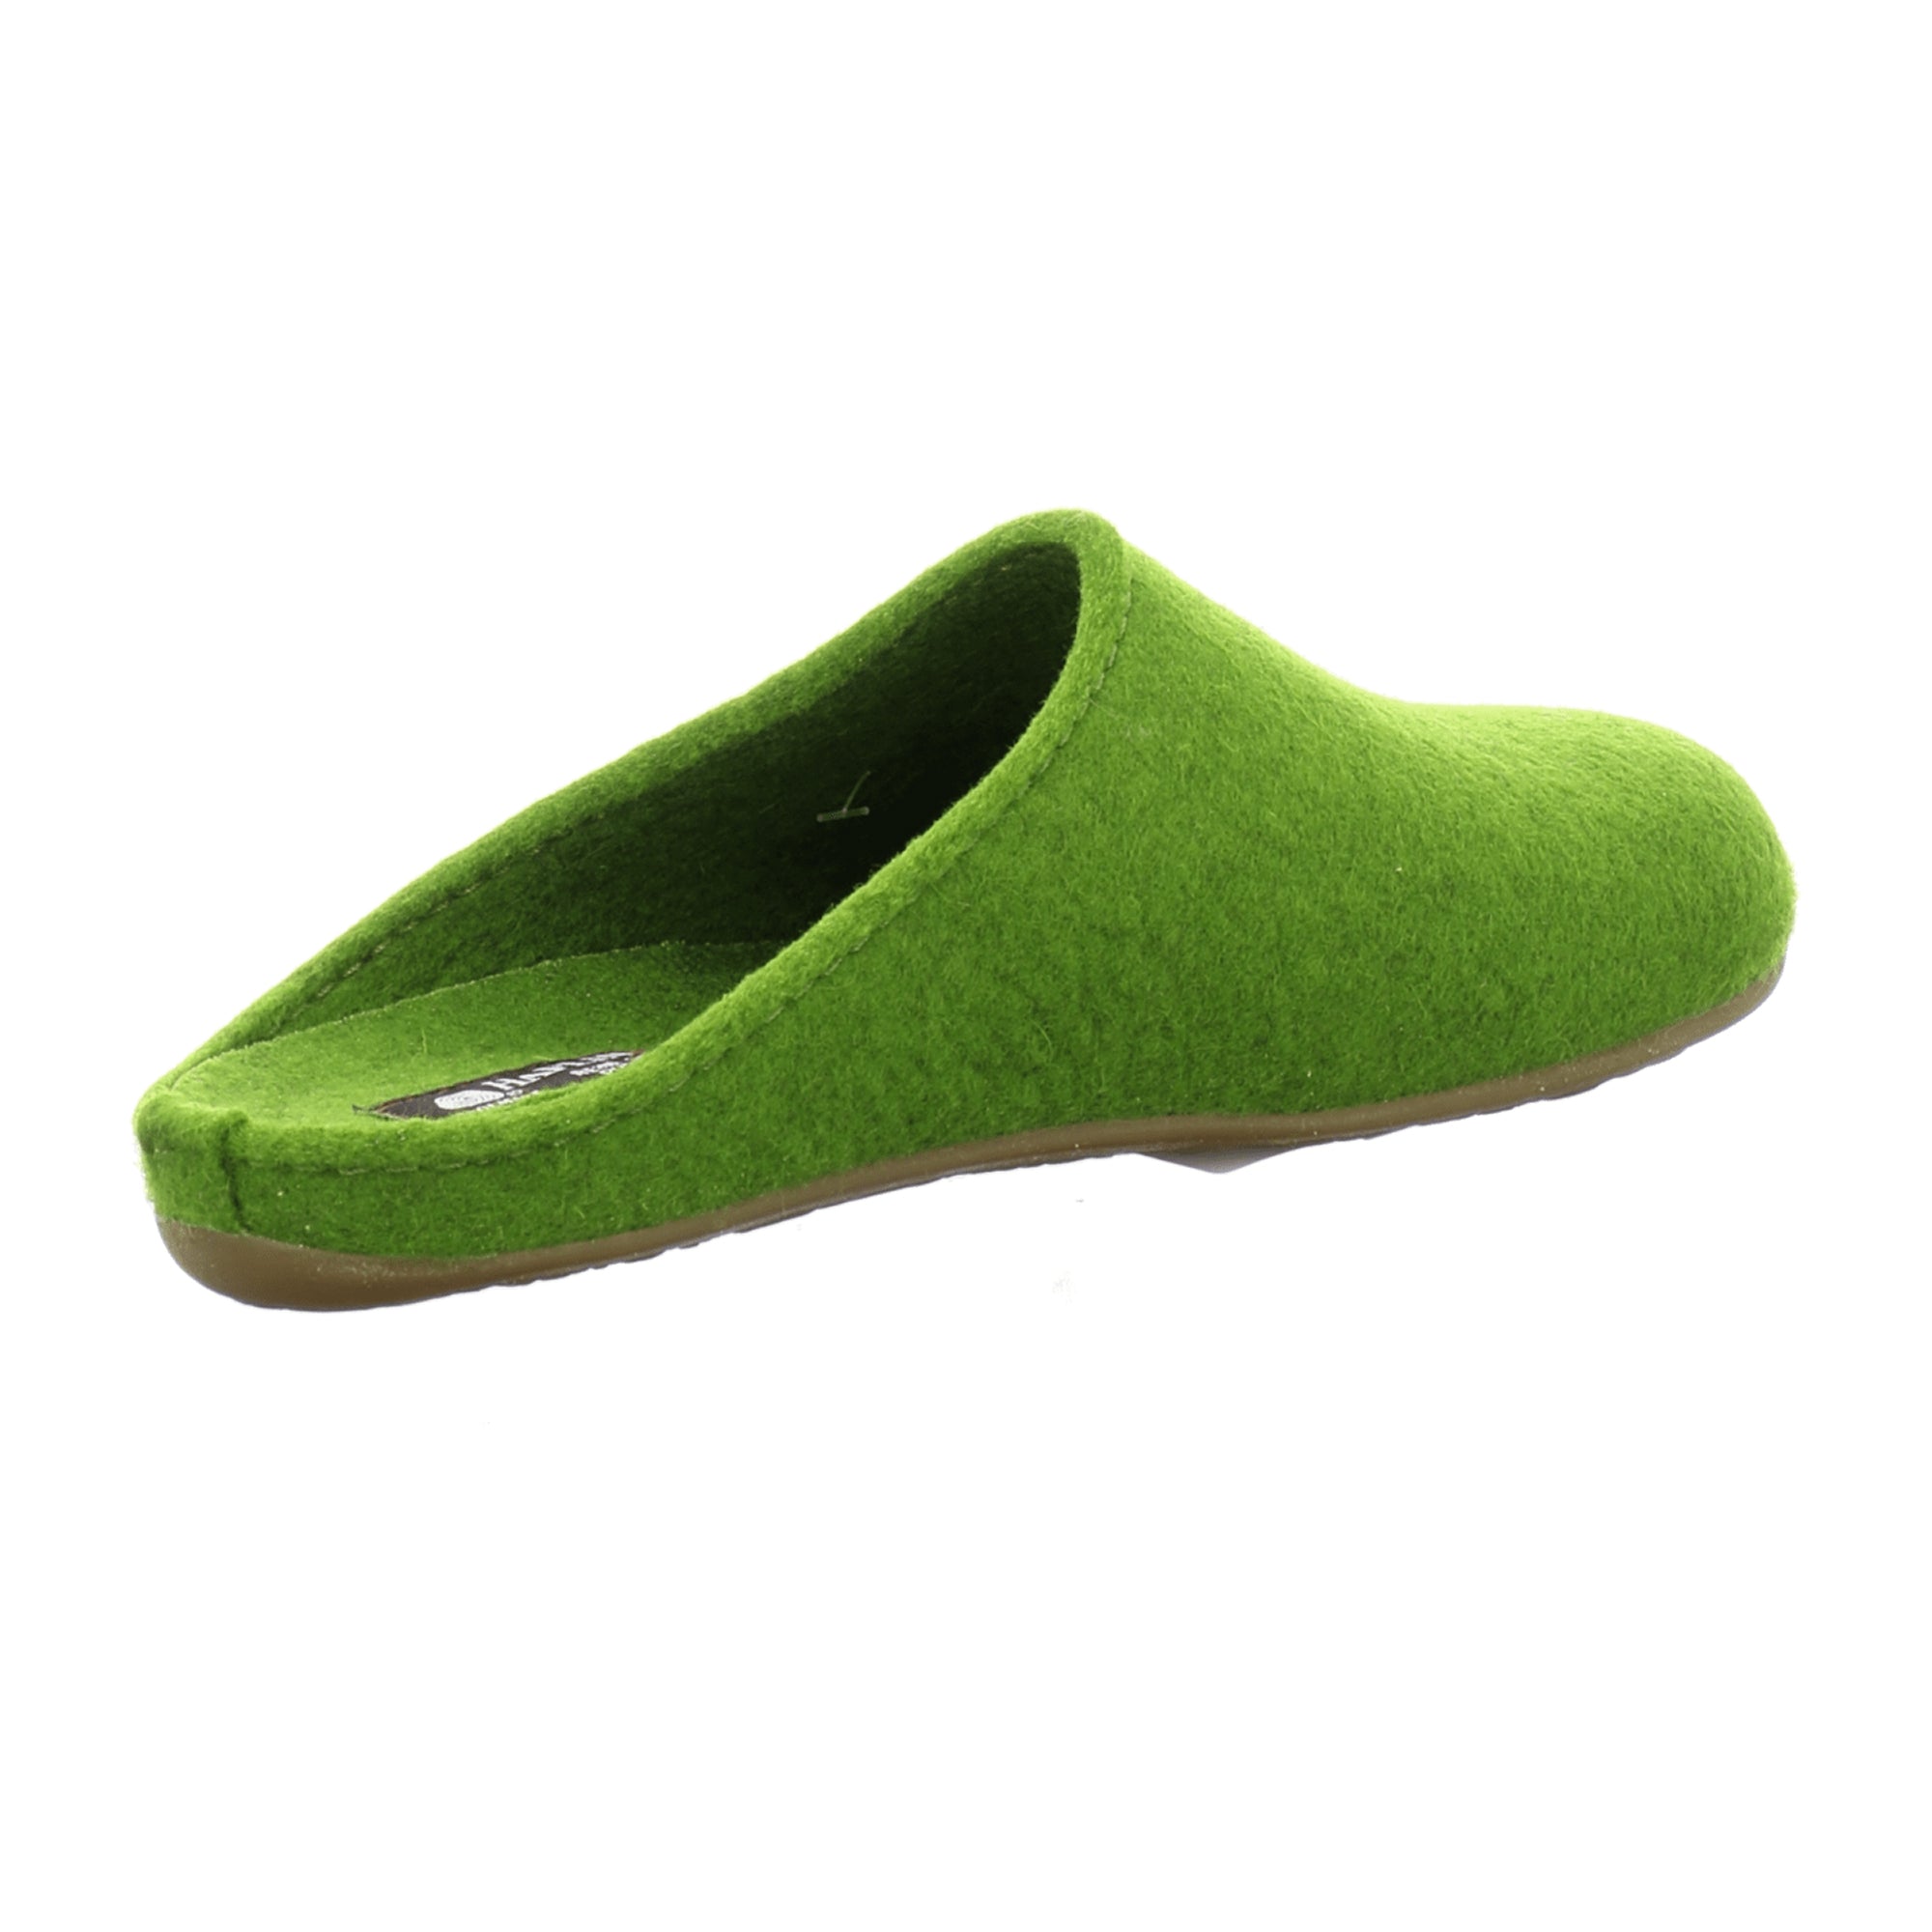 Haflinger 481024 Men's Comfortable Wool Slippers, Green